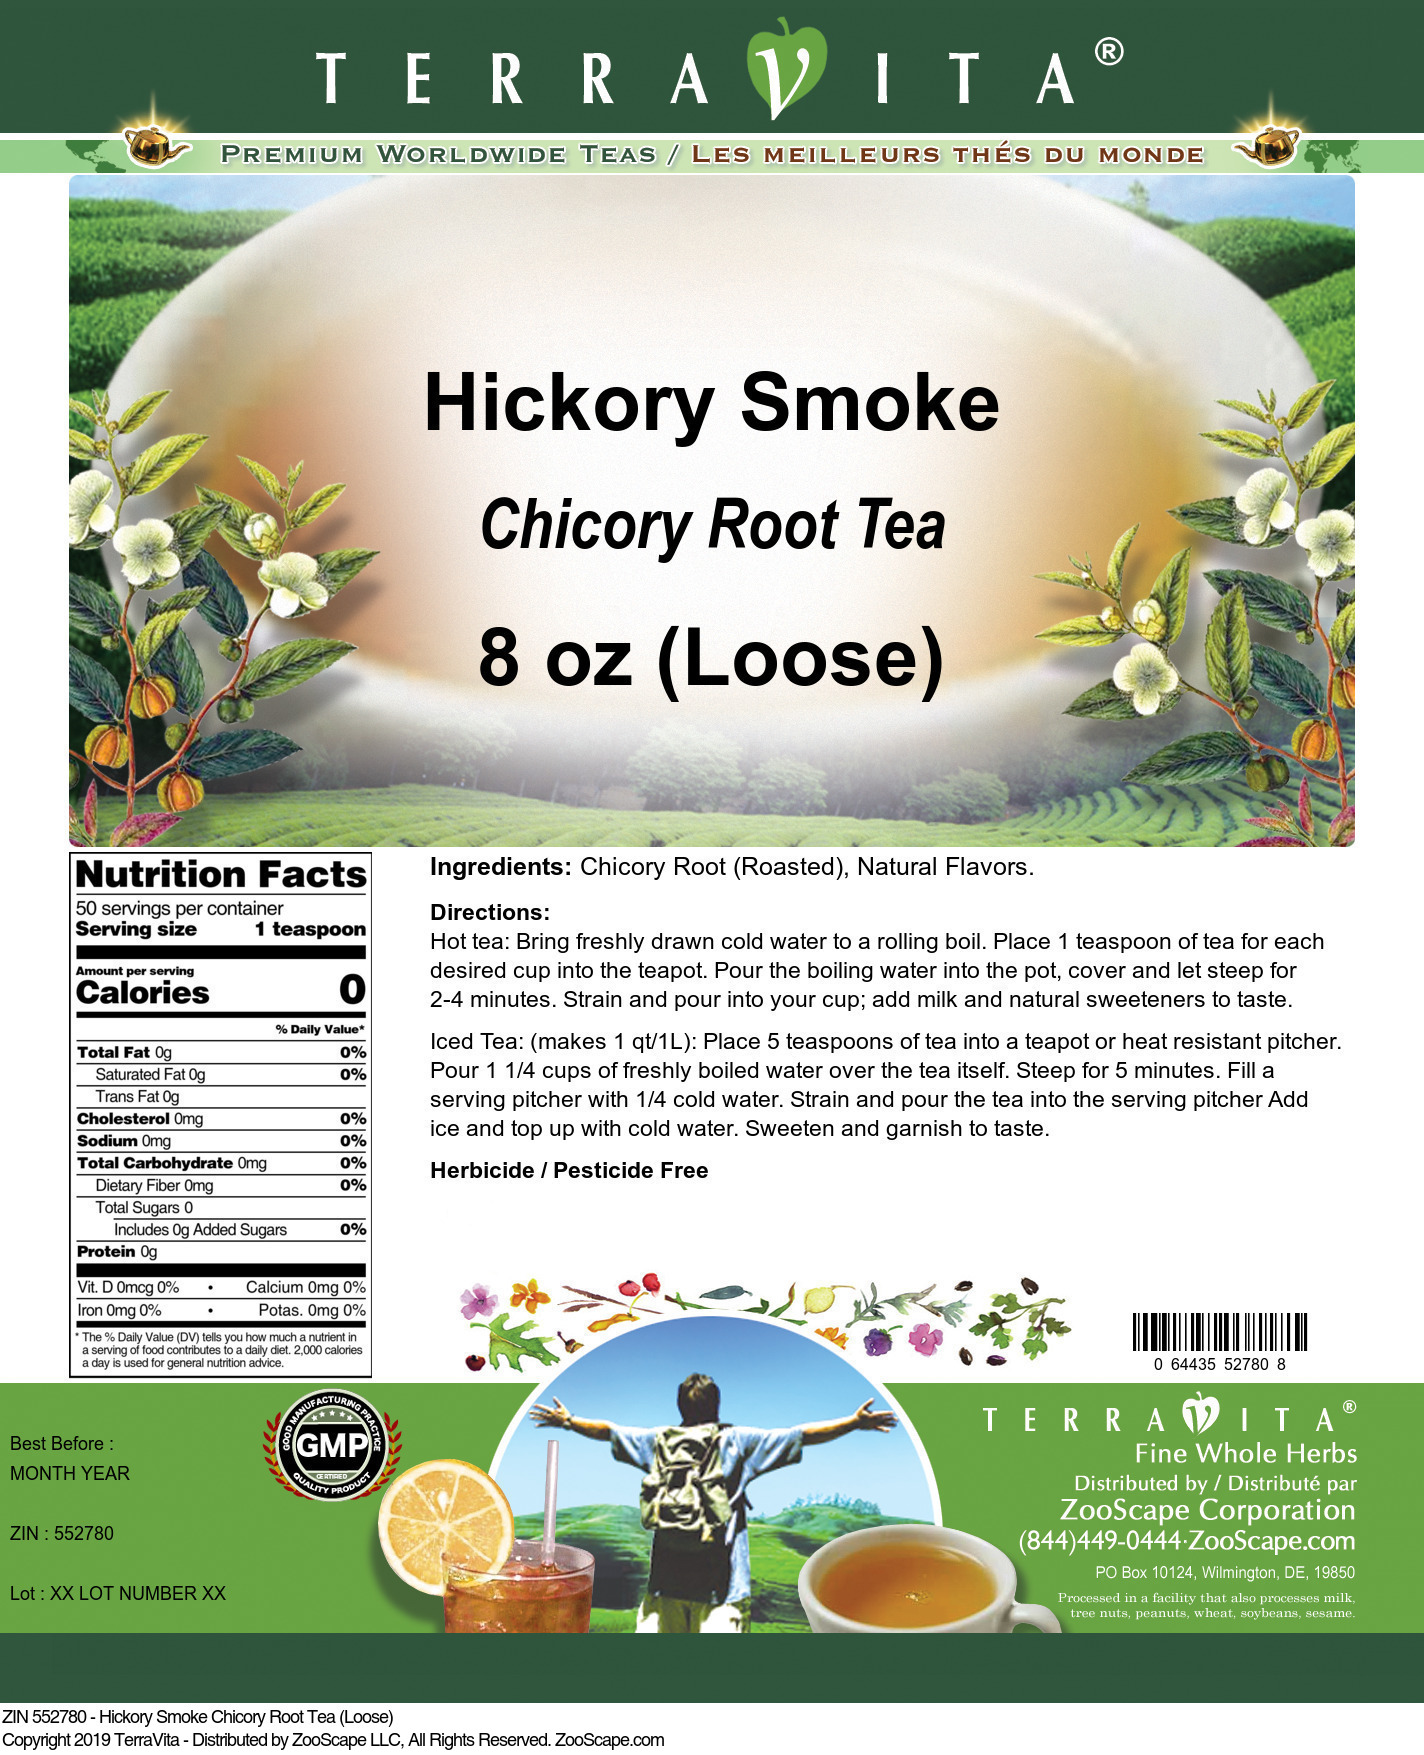 Hickory Smoke Chicory Root Tea (Loose) - Label